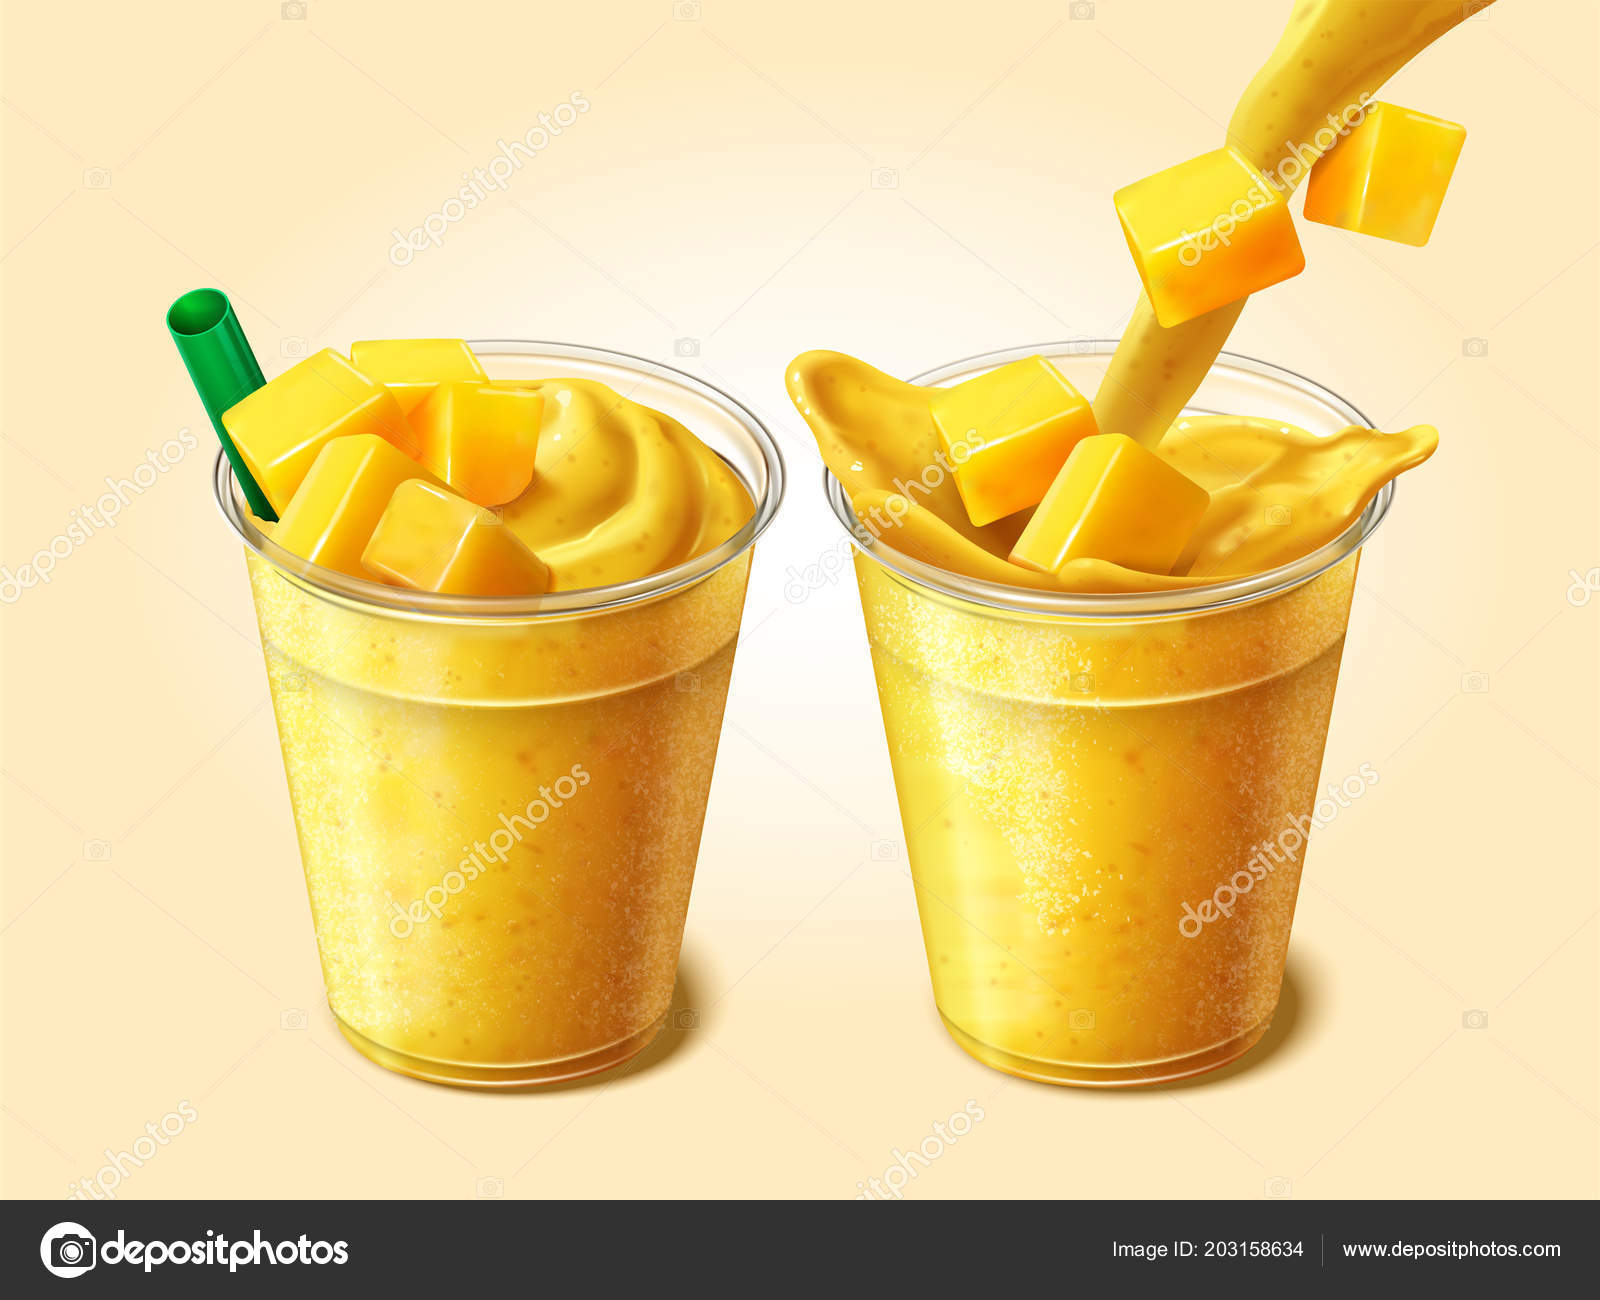 https://st4.depositphotos.com/5389310/20315/v/1600/depositphotos_203158634-stock-illustration-mango-juice-smoothie-pouring-transparent.jpg